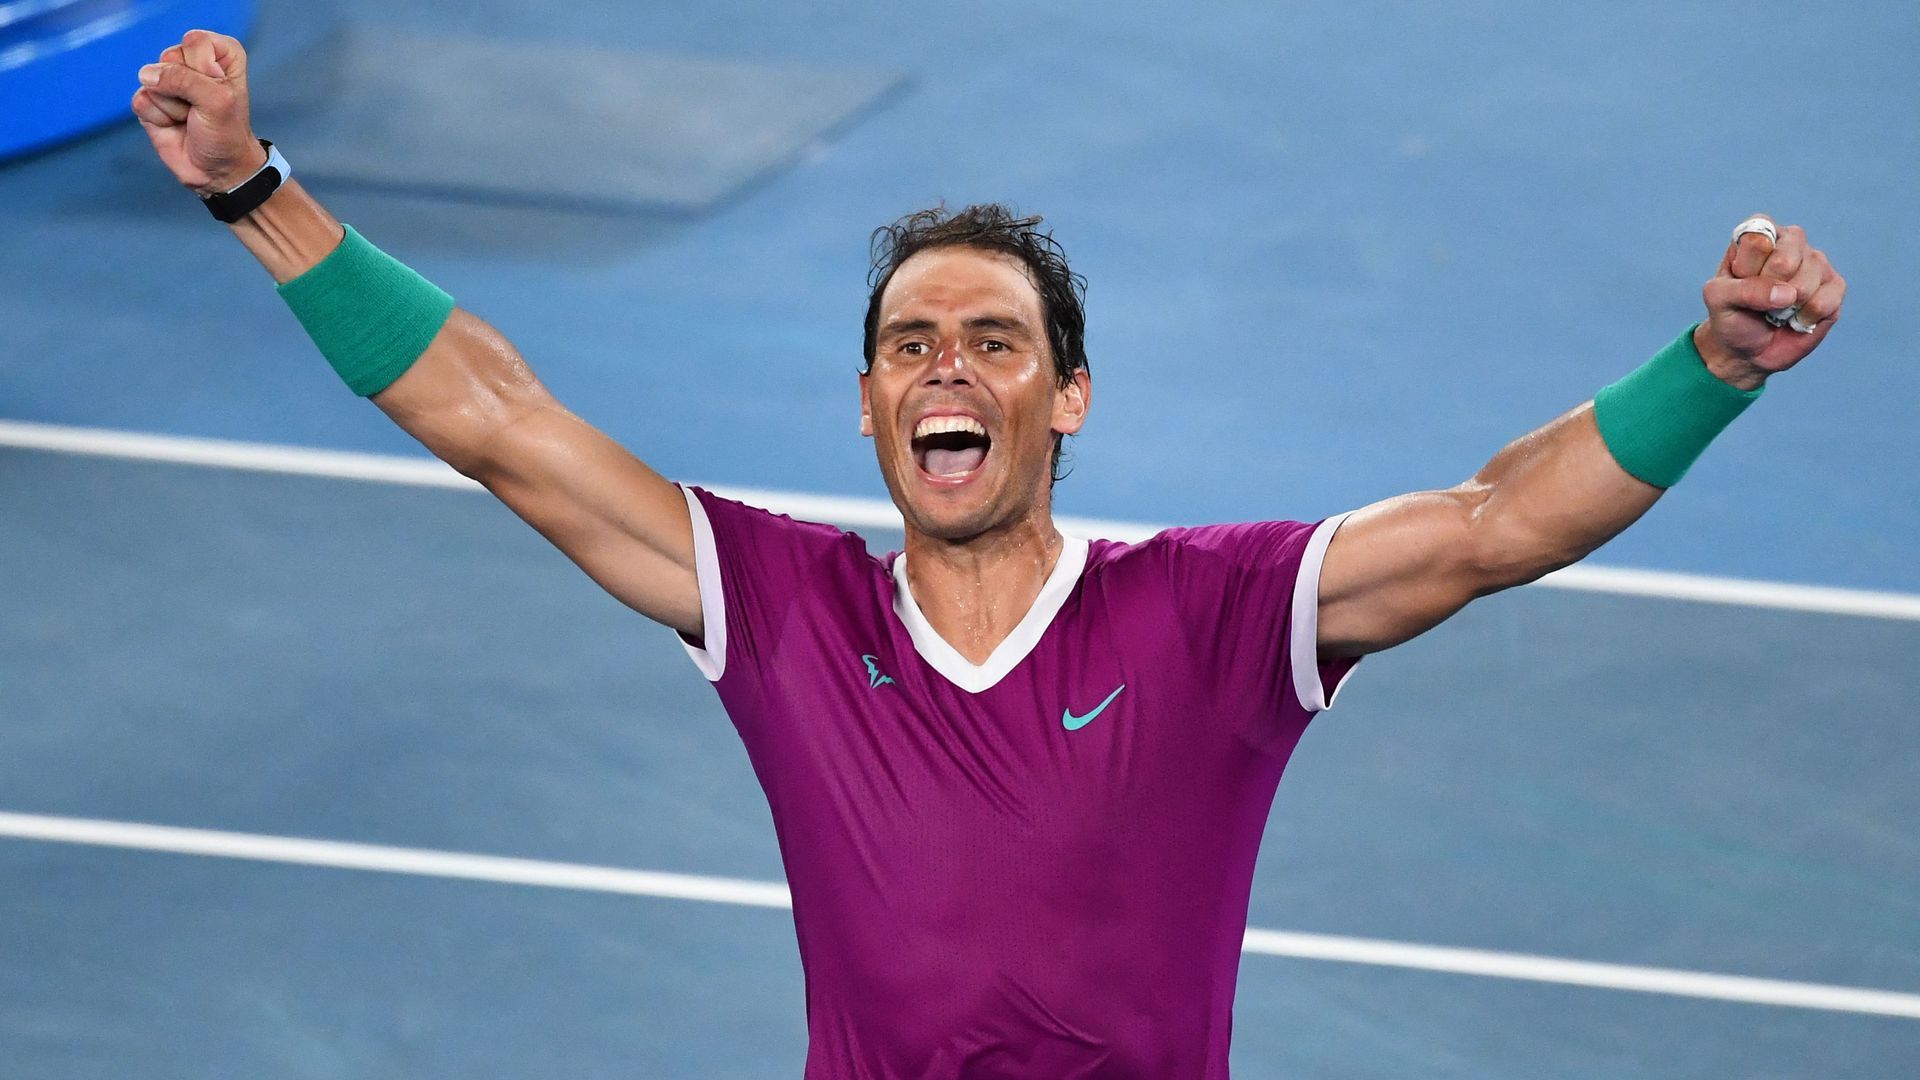 Rafael Nadal celebrates after winning the Australian Open